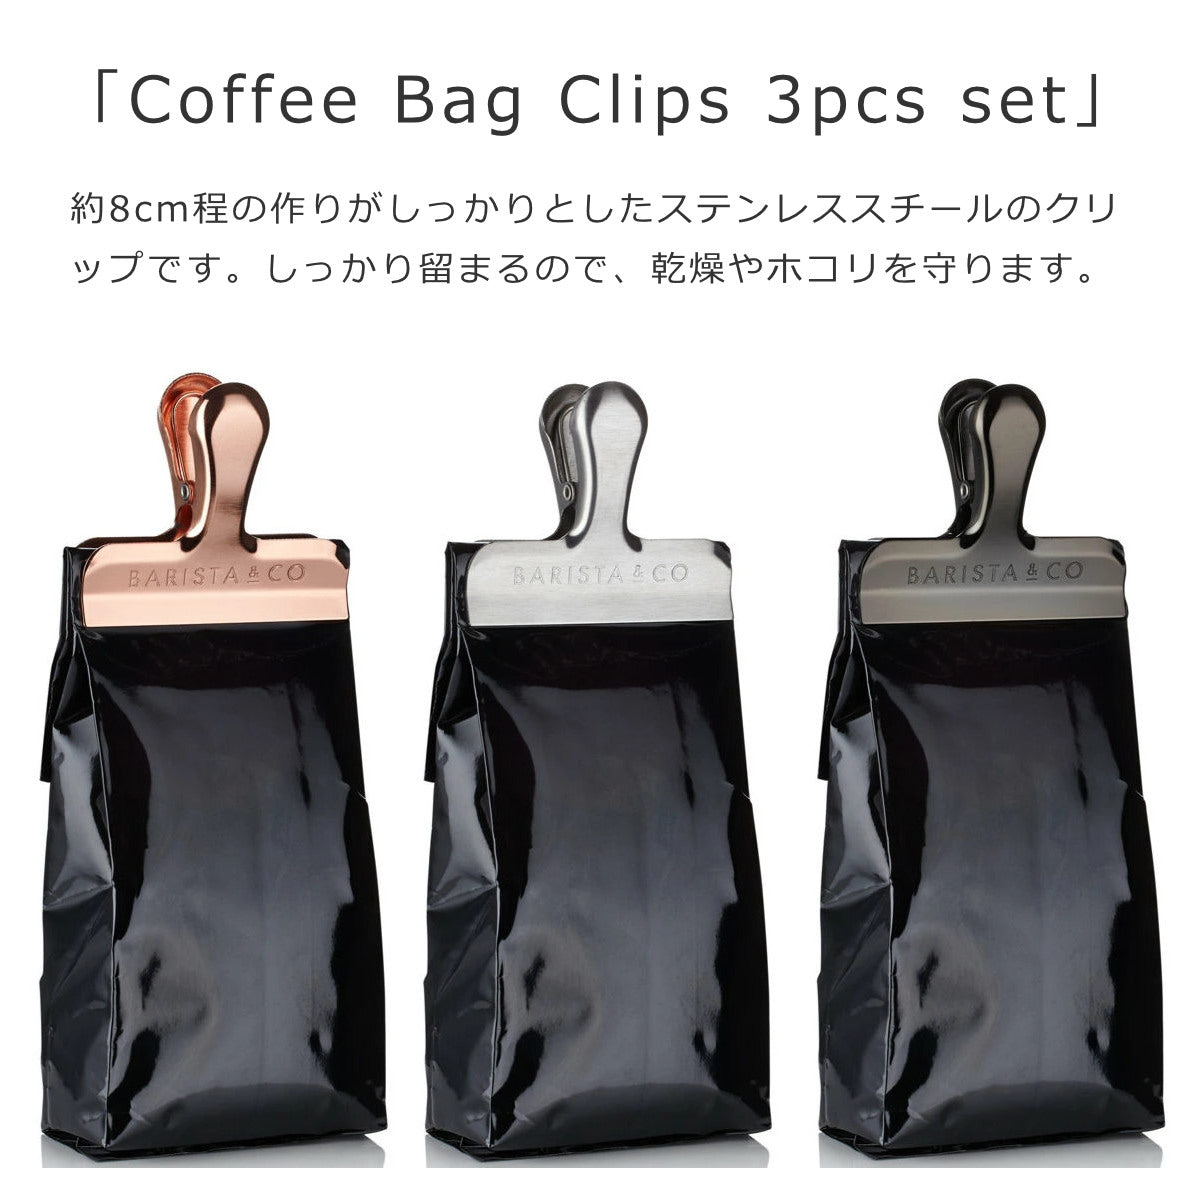 Coffee Bag Clips - Set of 3